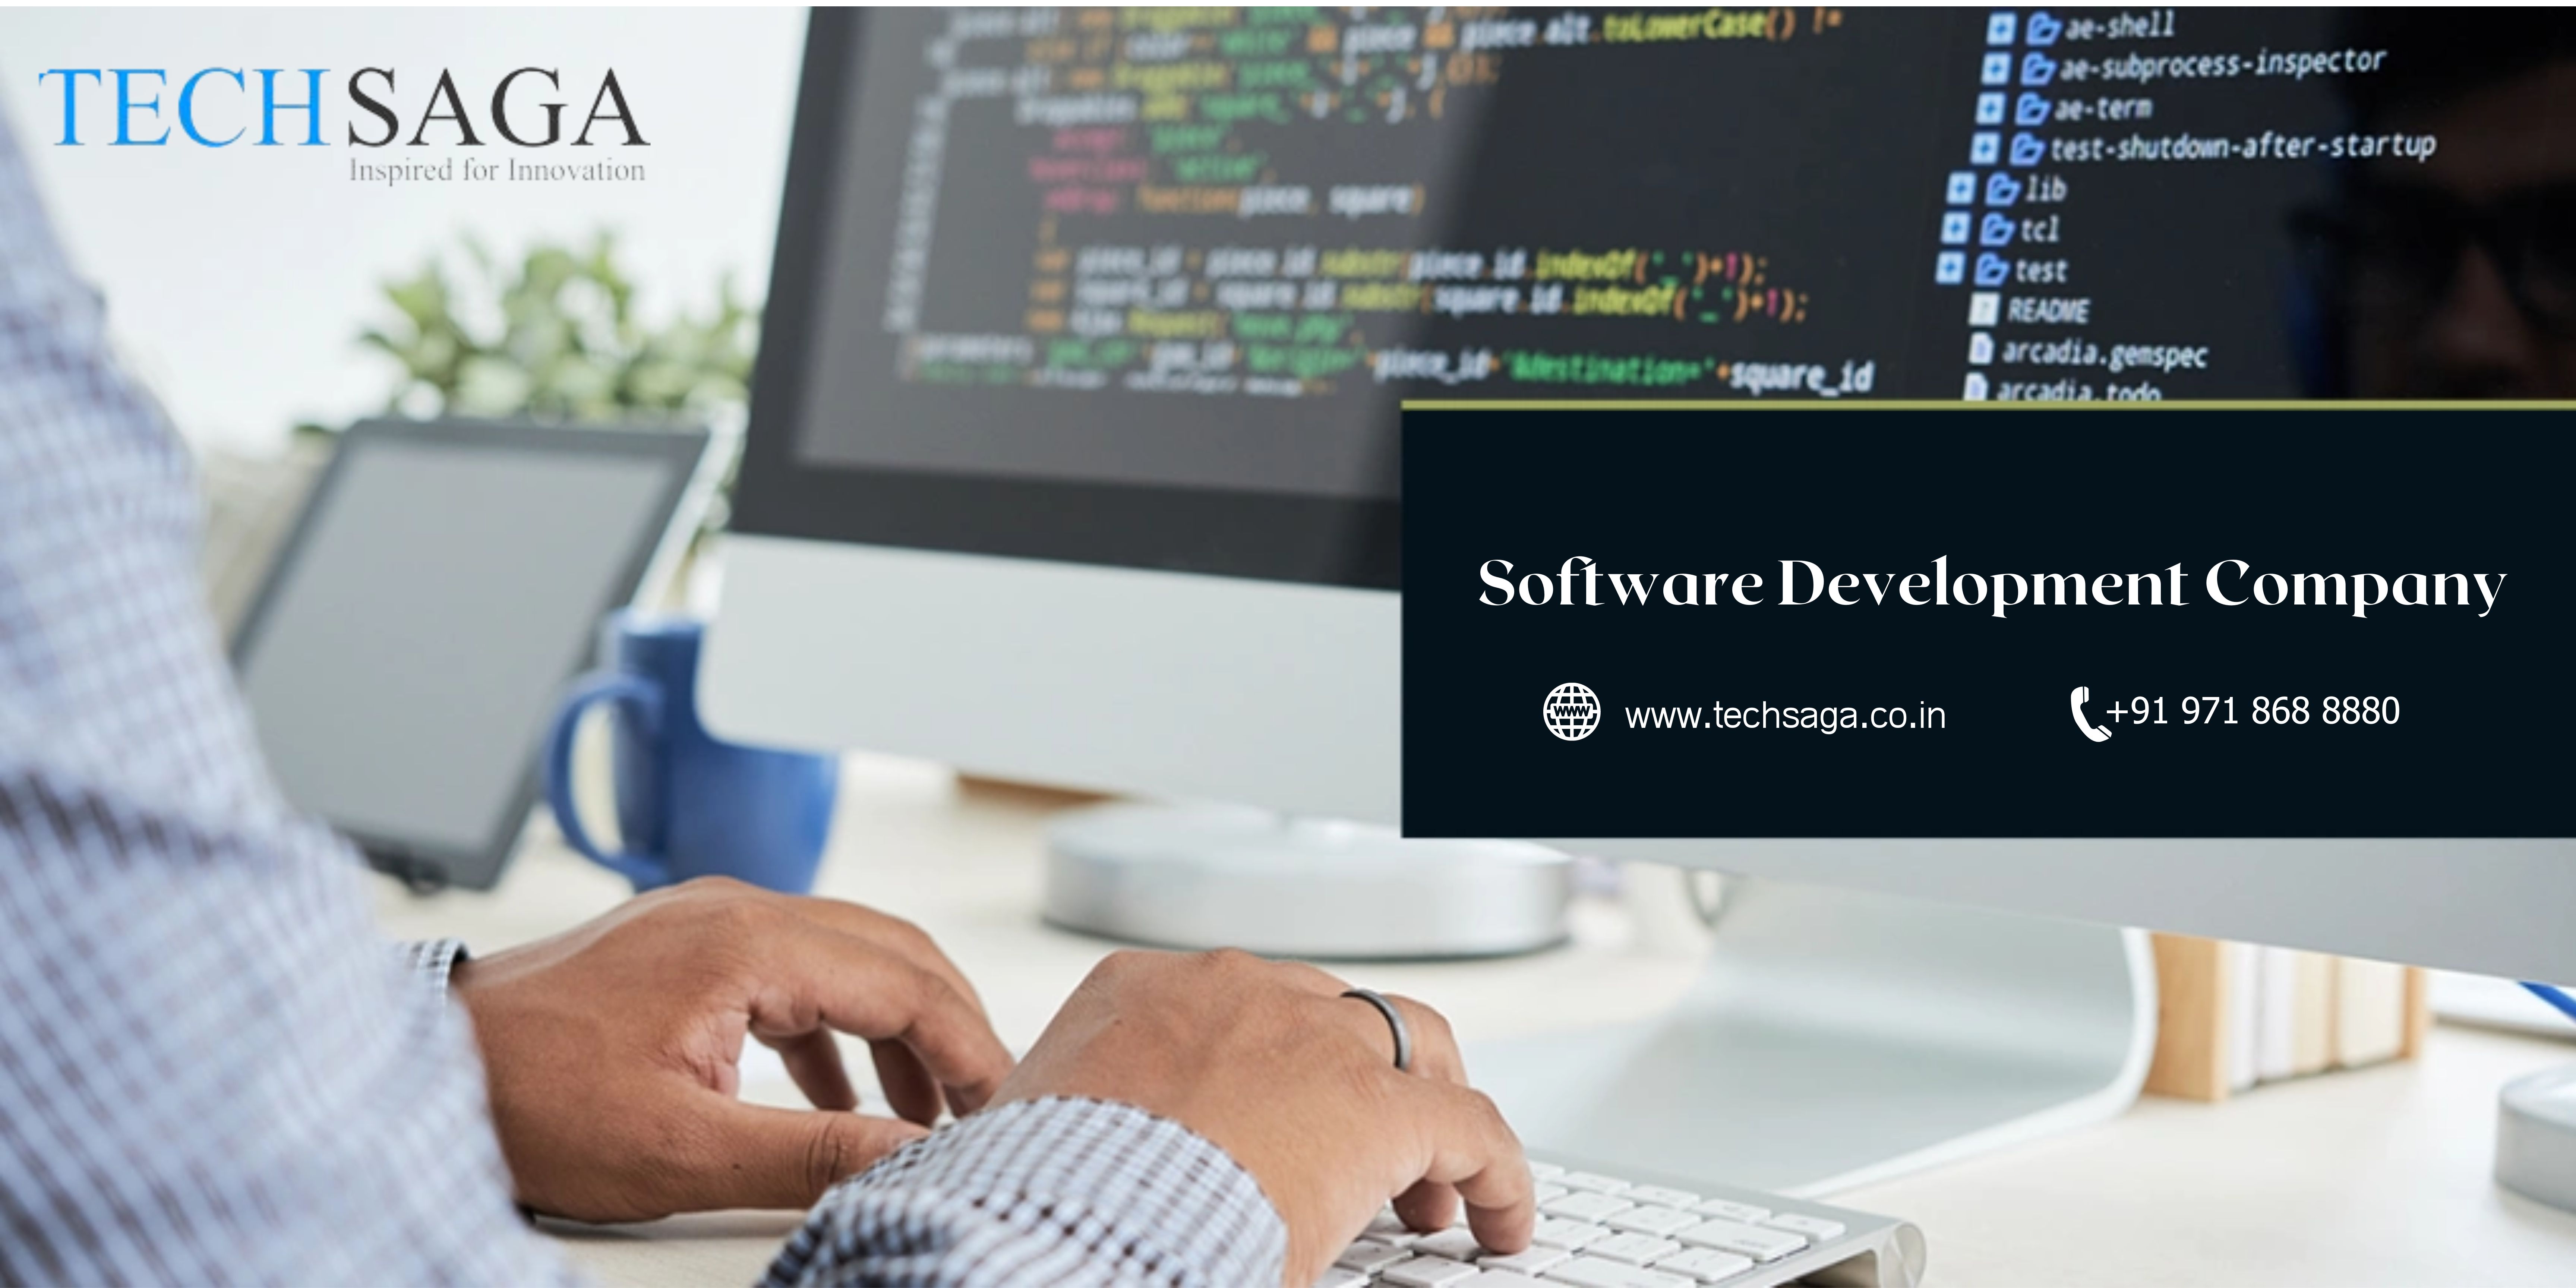 Software Development Company.jpg  by techsaga